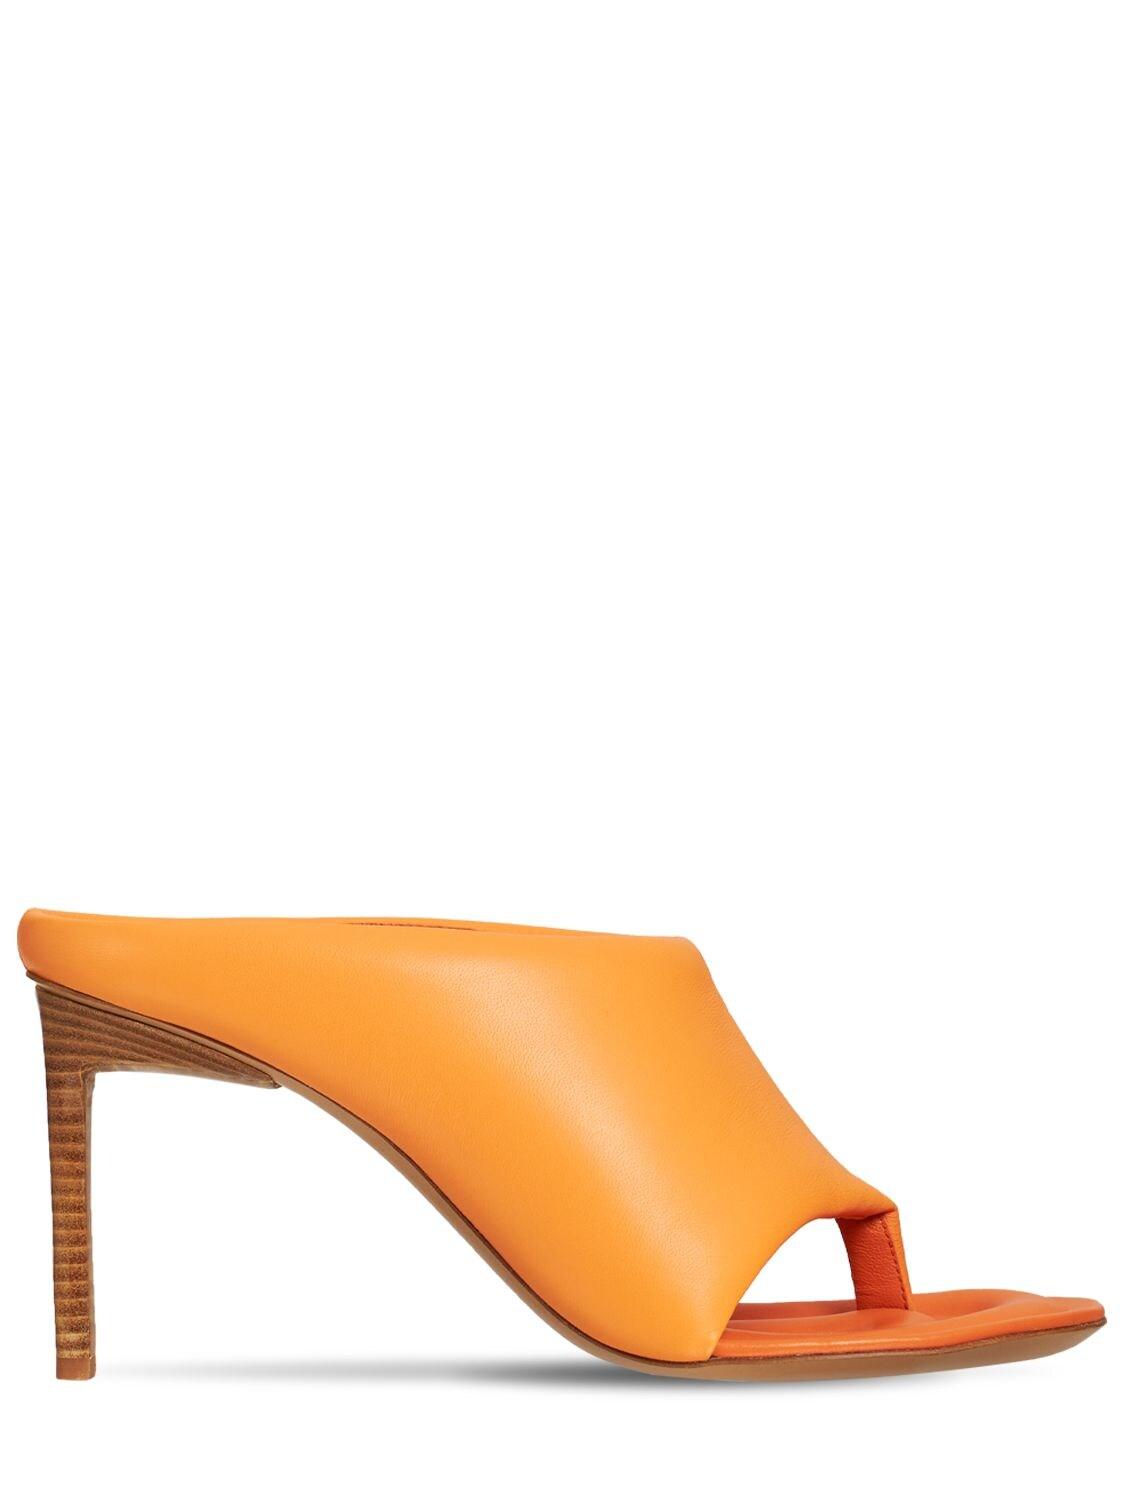 Jacquemus 80mm Les Mules Limone Leather Sandals in Orange | Lyst